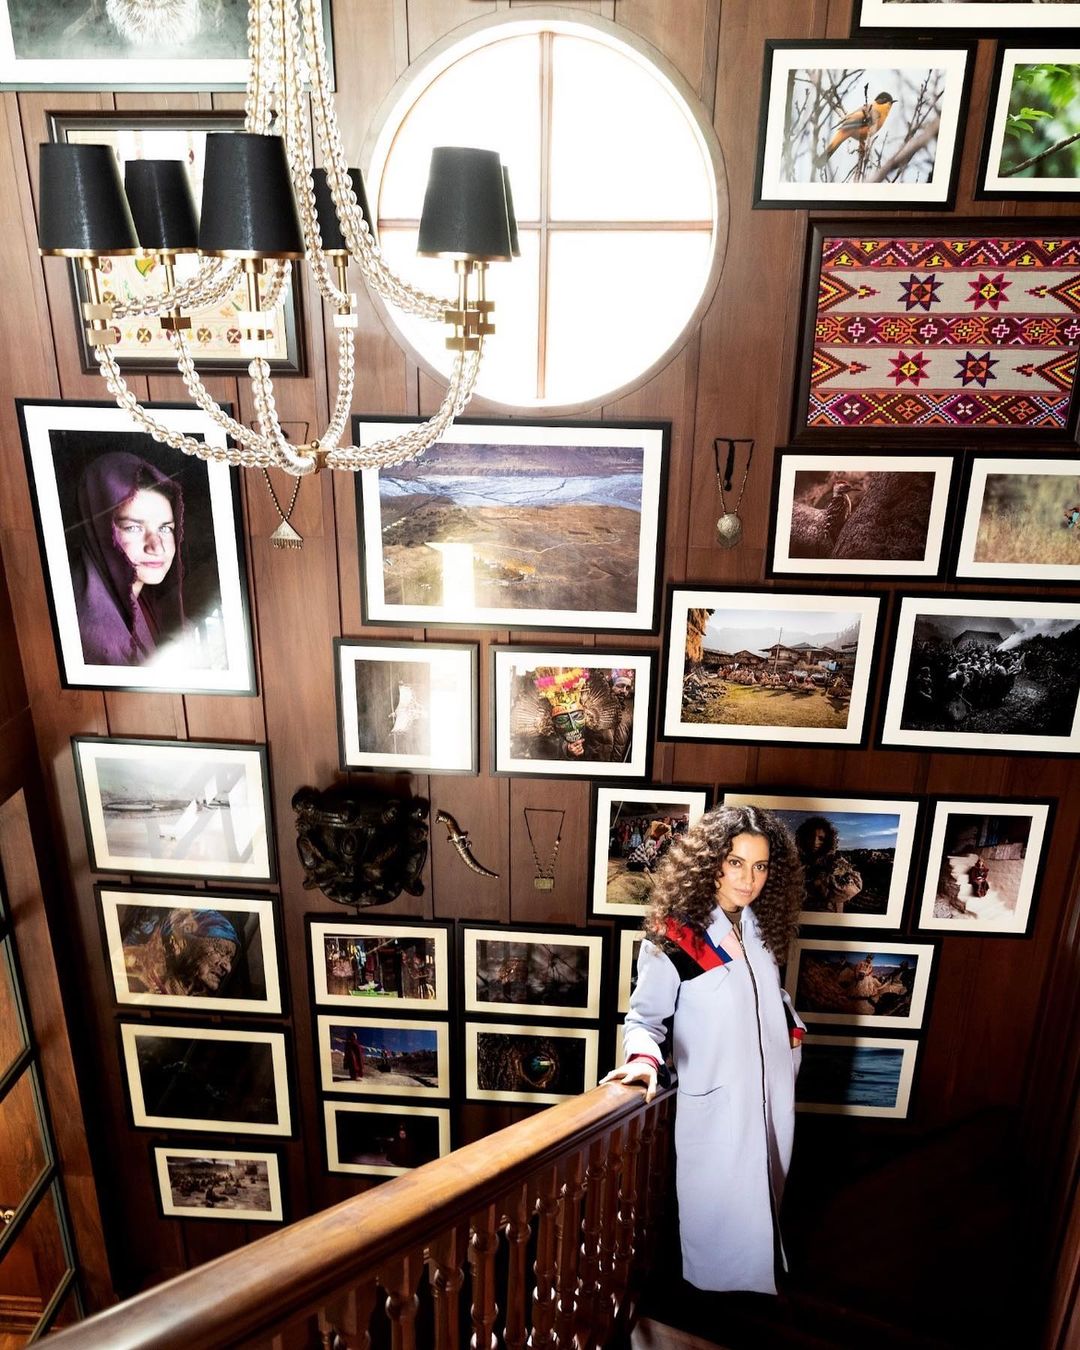 Inside peek into Kangana Ranaut's new "mountain style" home in Manali - Asiana Times